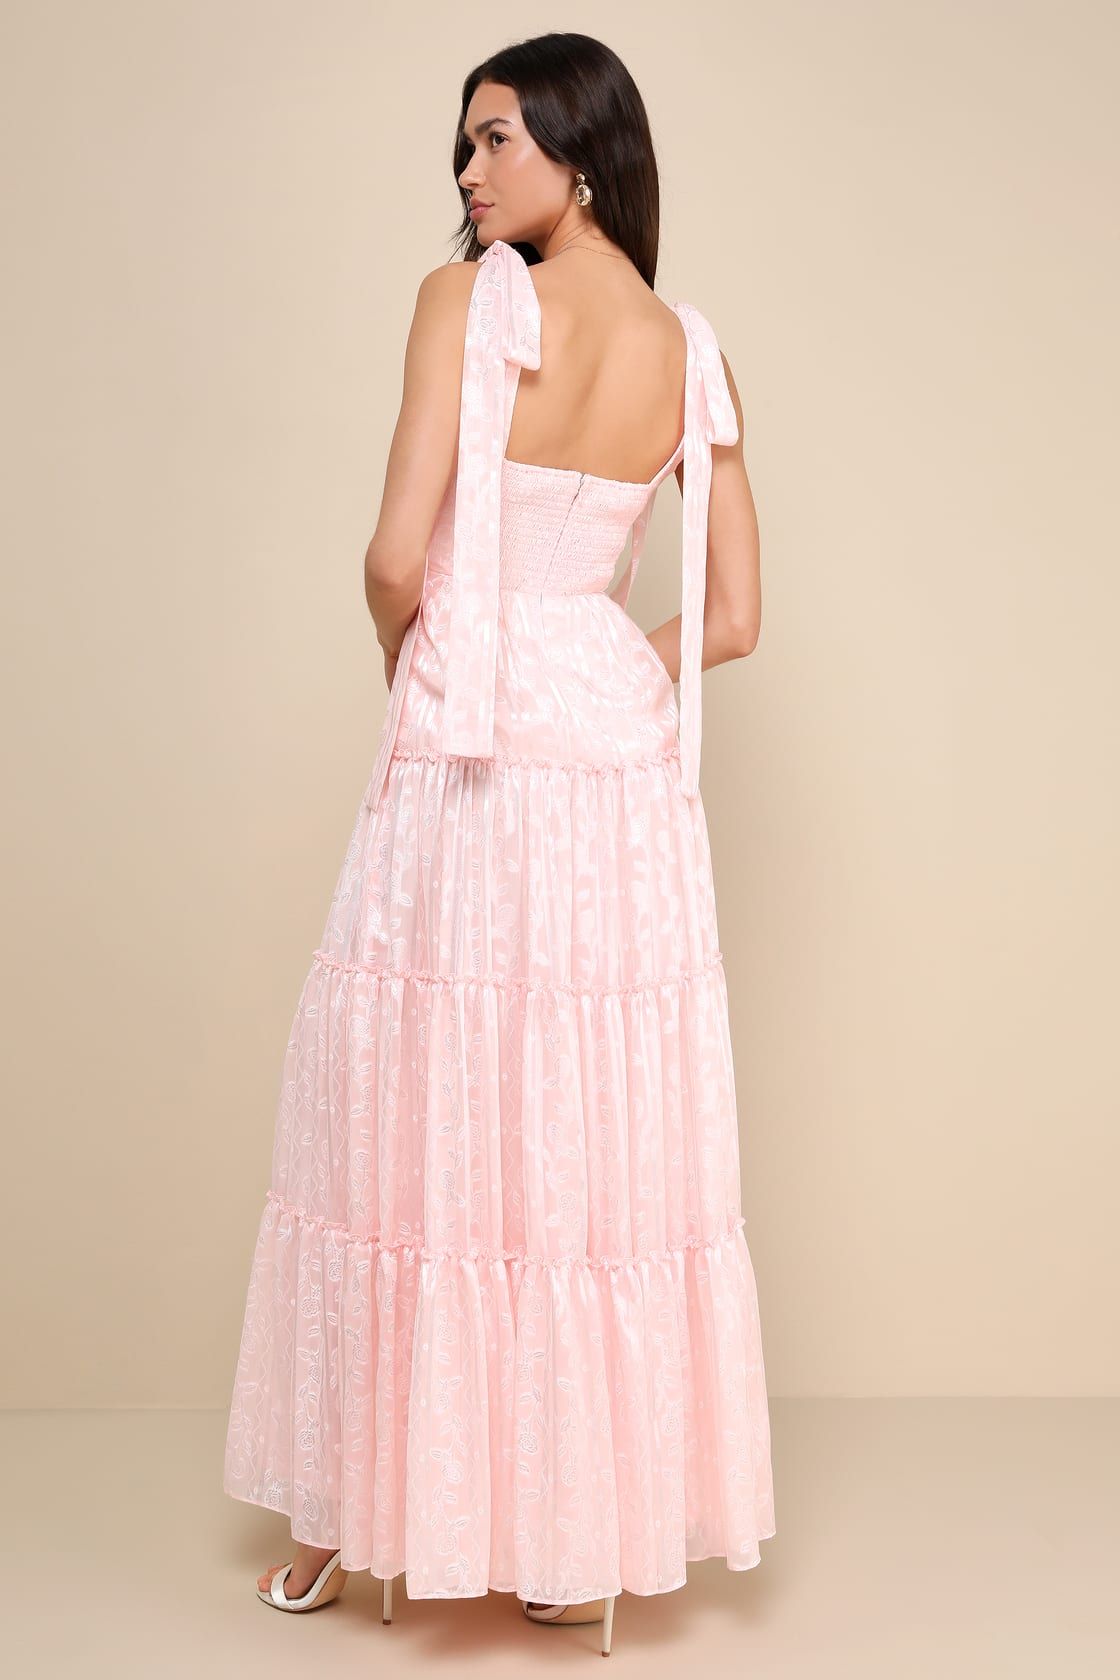 Picturesque Allure Blush Pink Jacquard Tie-Strap Maxi Dress | Lulus